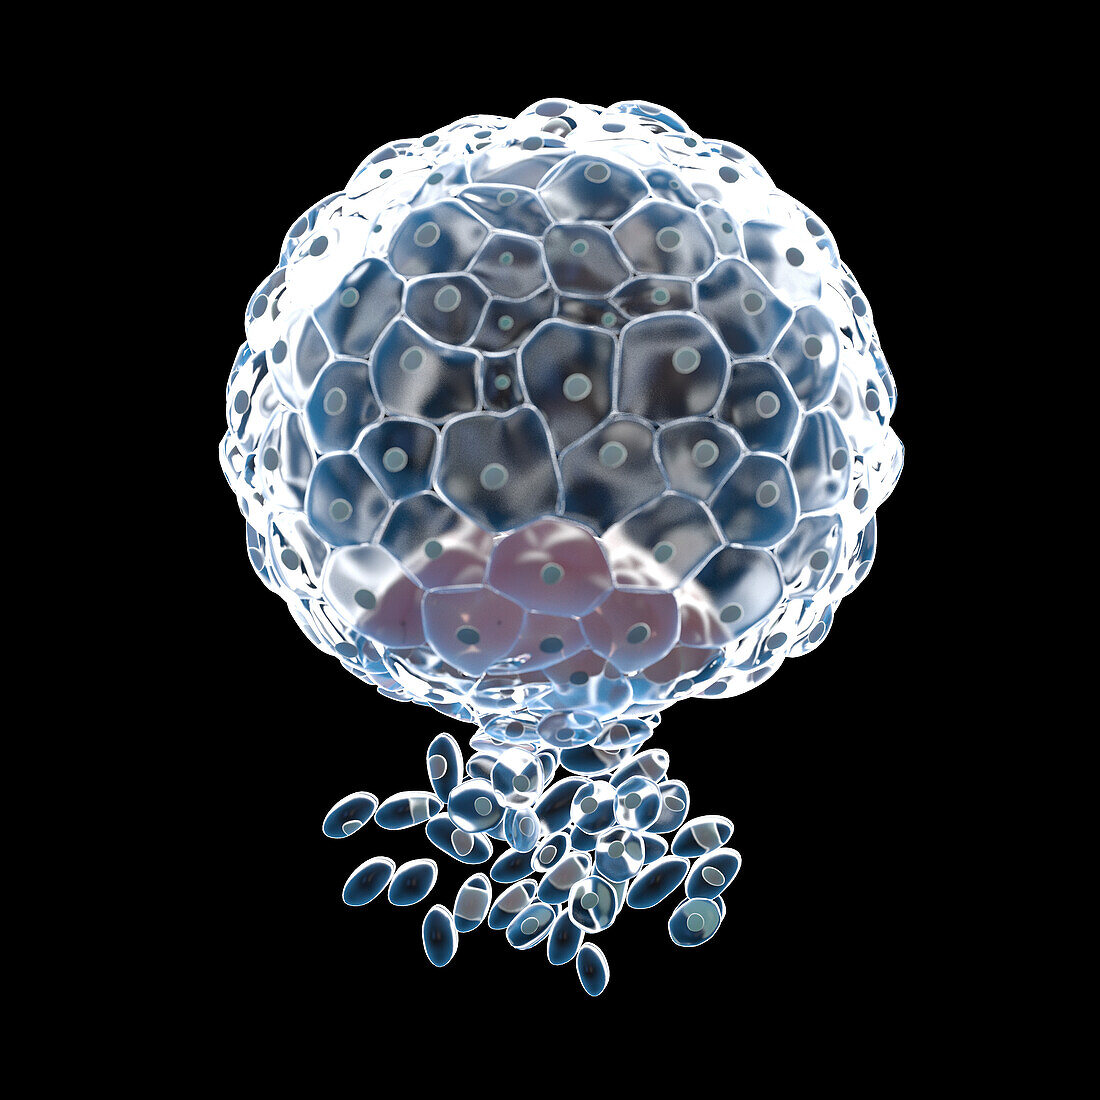 Implanted blastocyst, illustration